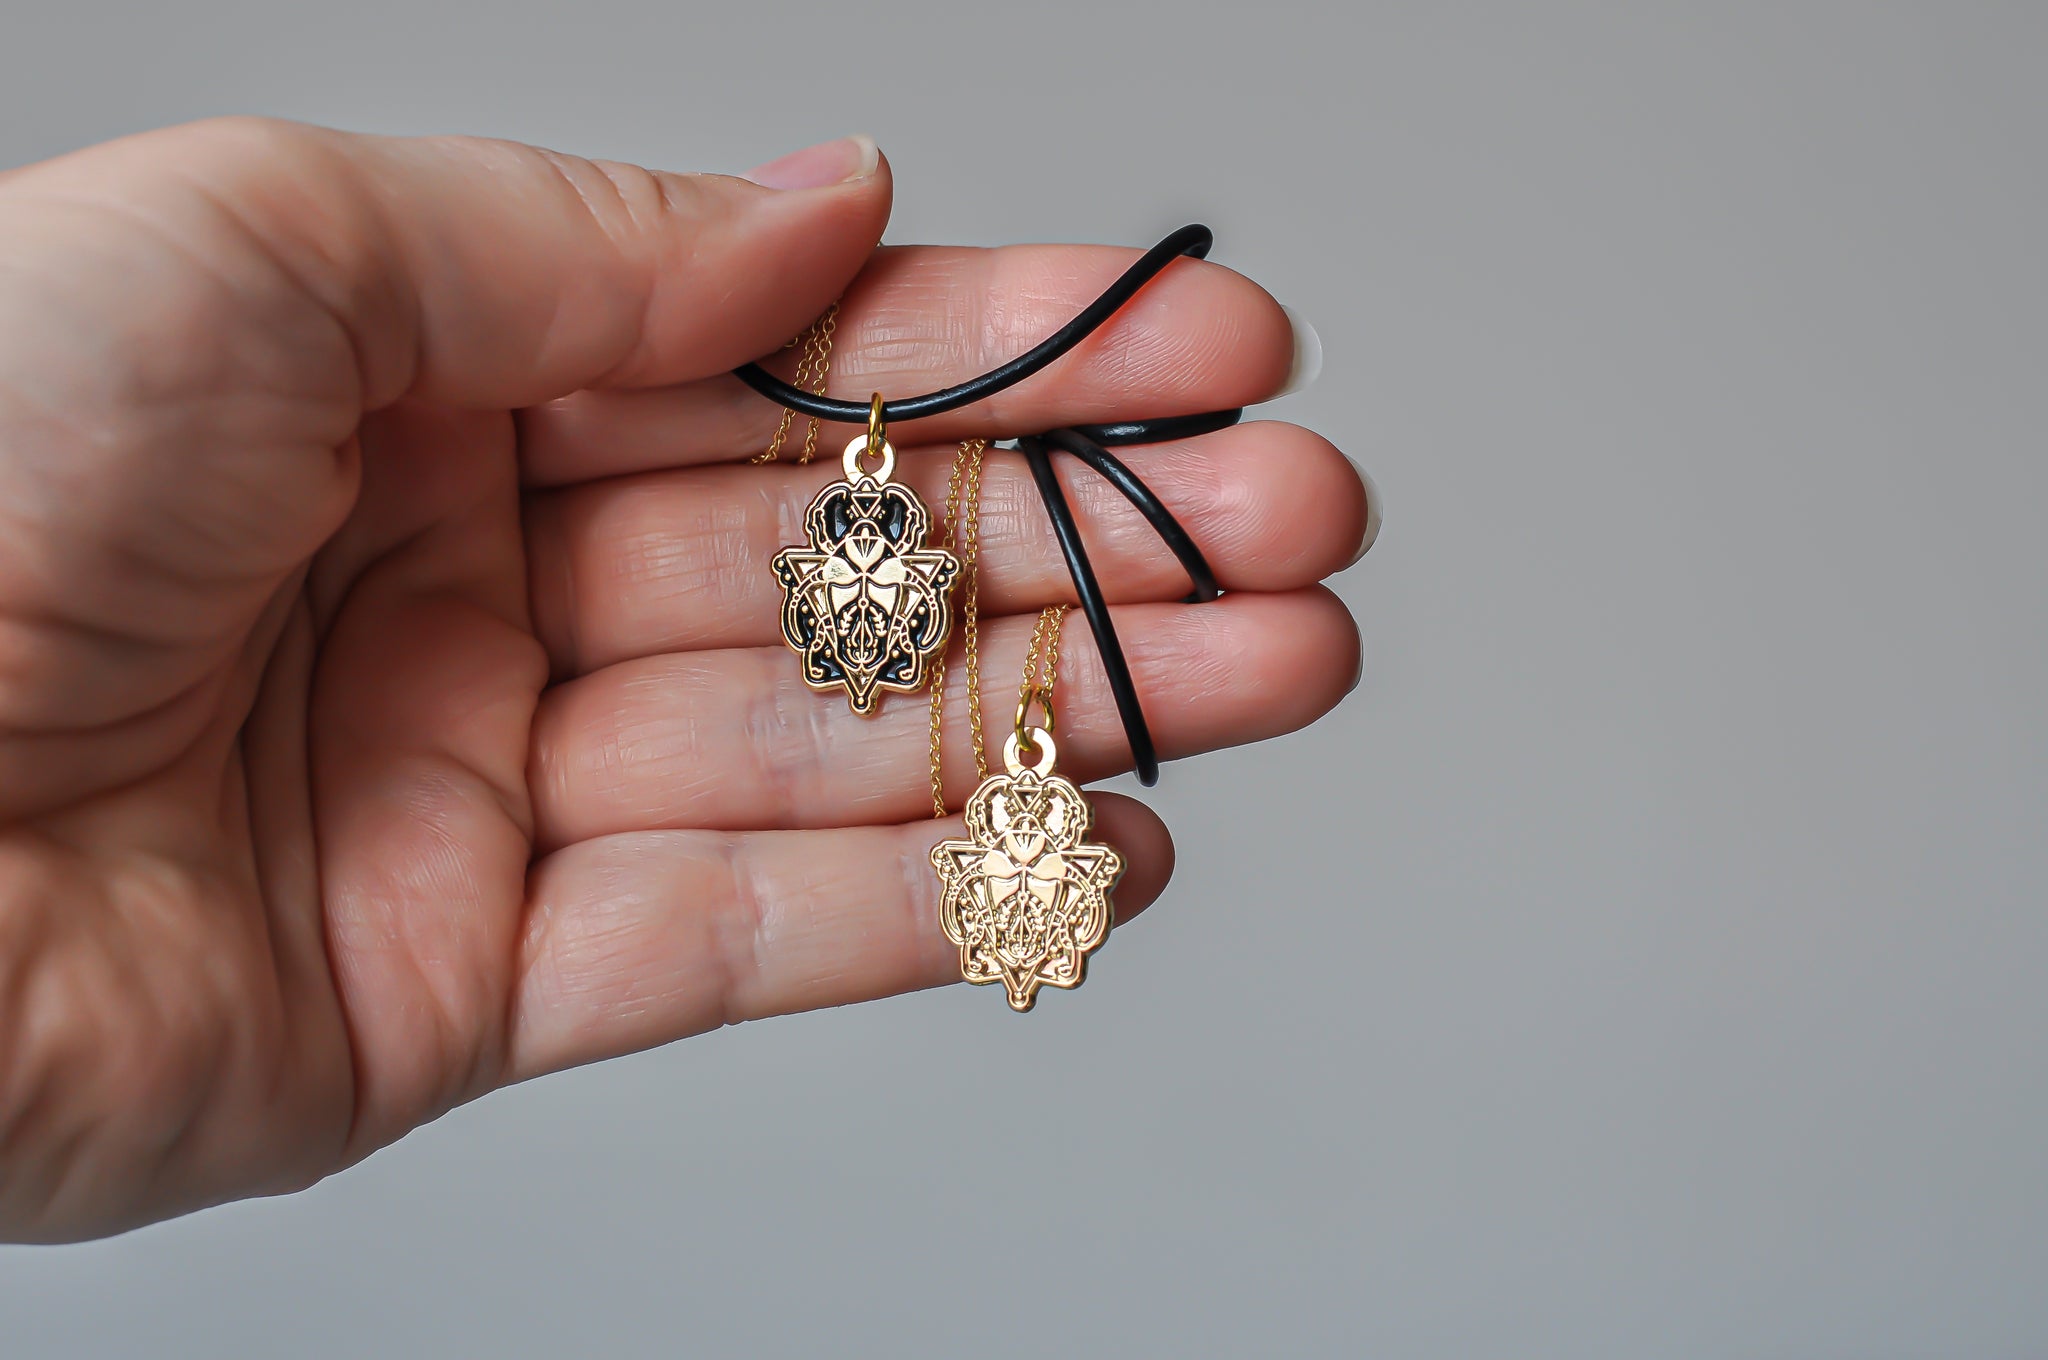 Gold Beetle Pendant Necklace